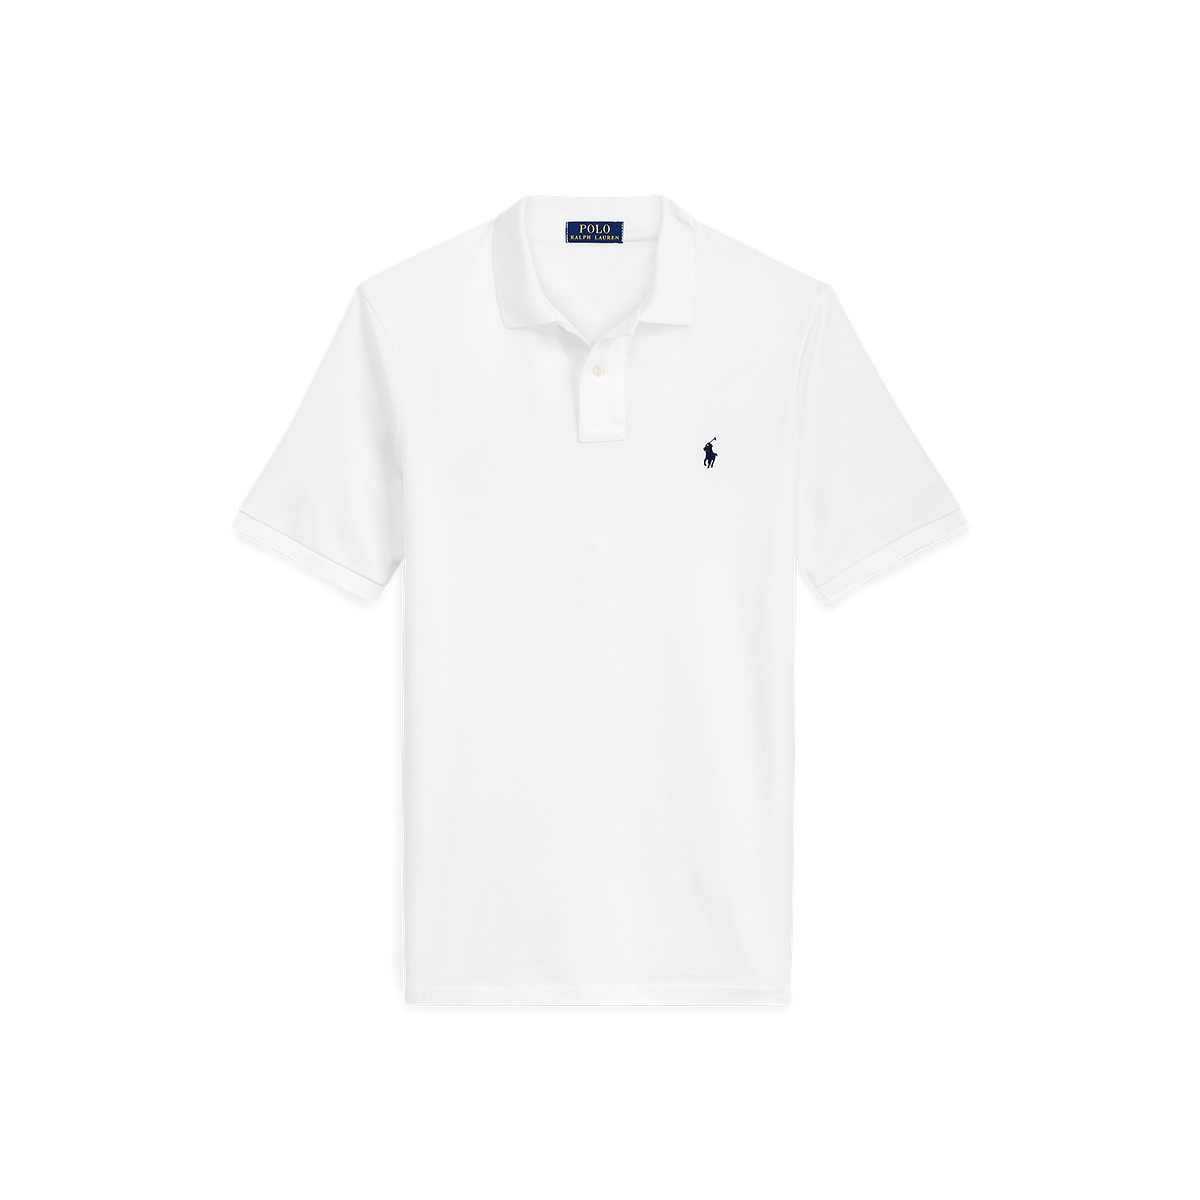 Polo Ralph Lauren Men's Big & Tall Embroidered T-Shirt-Black 